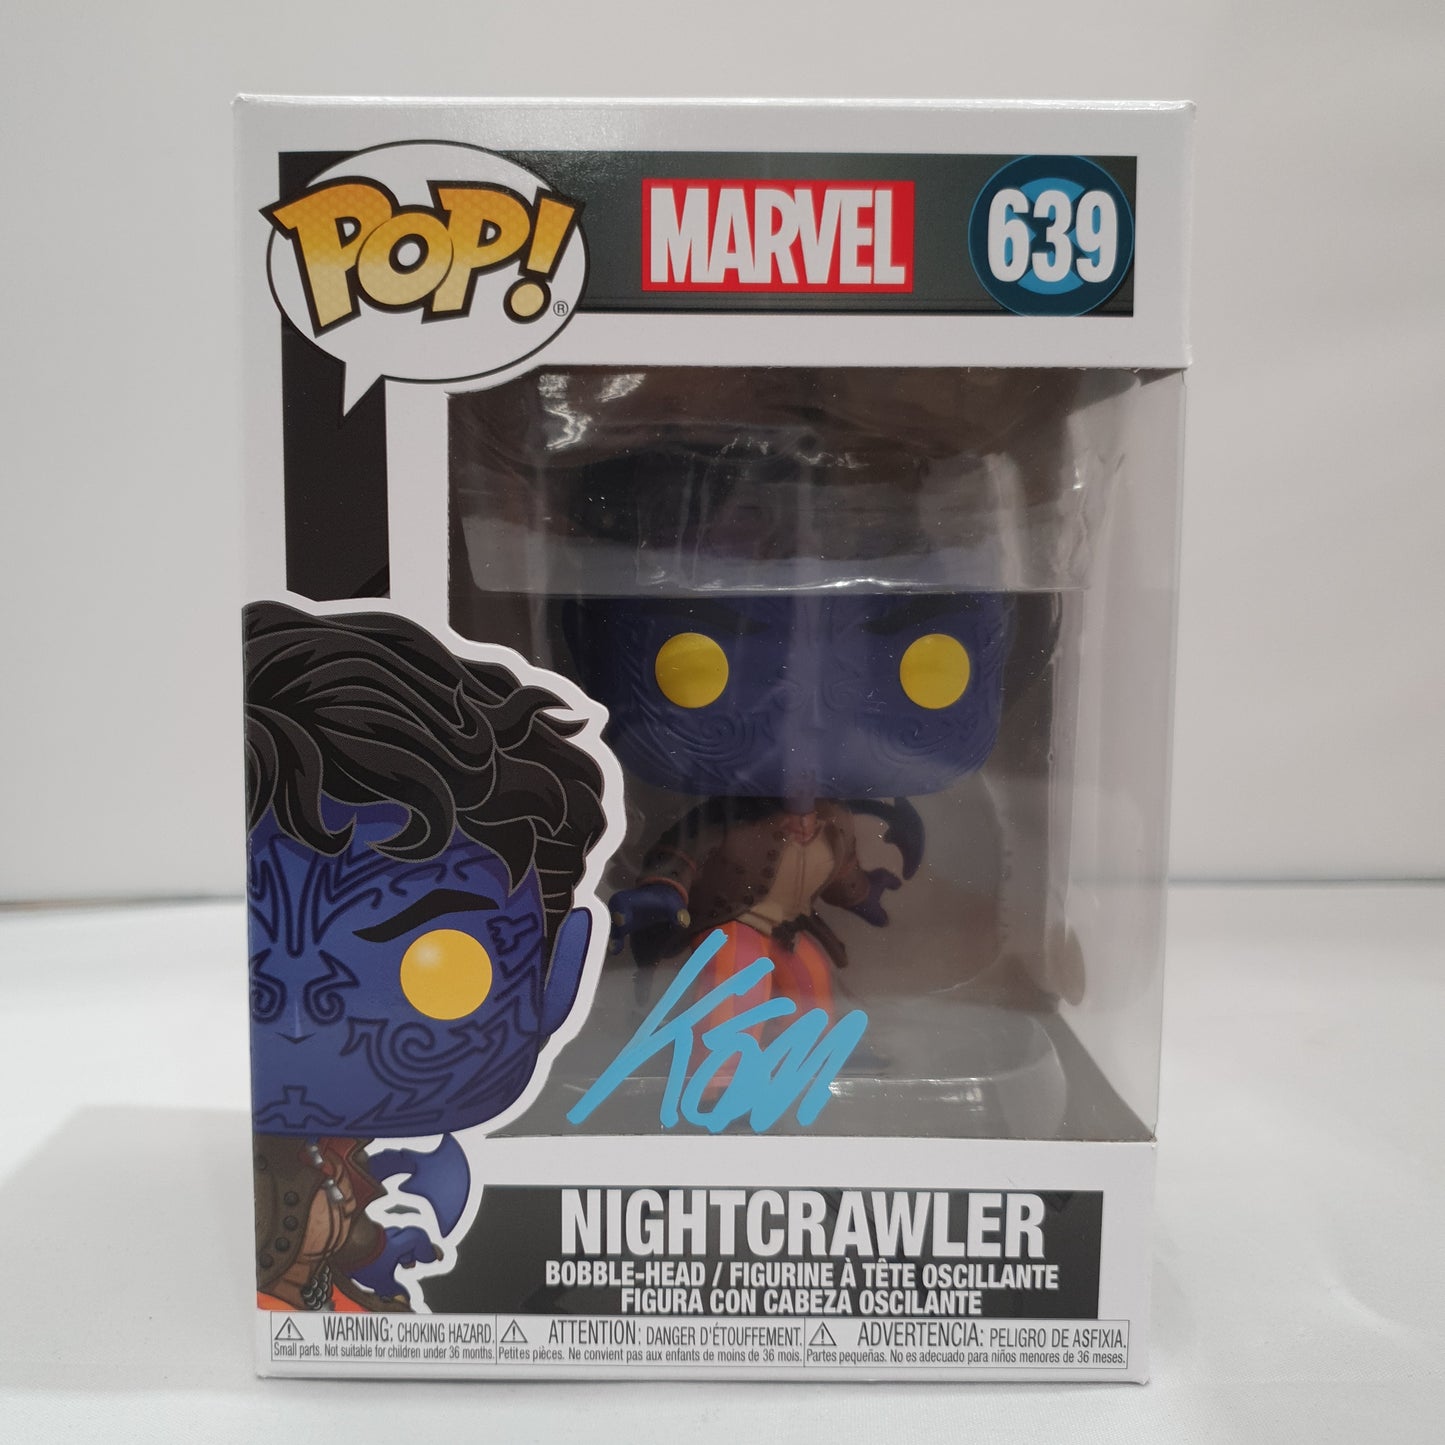 Marvel - Nightcrawler #639 Signed Pop! Vinyl